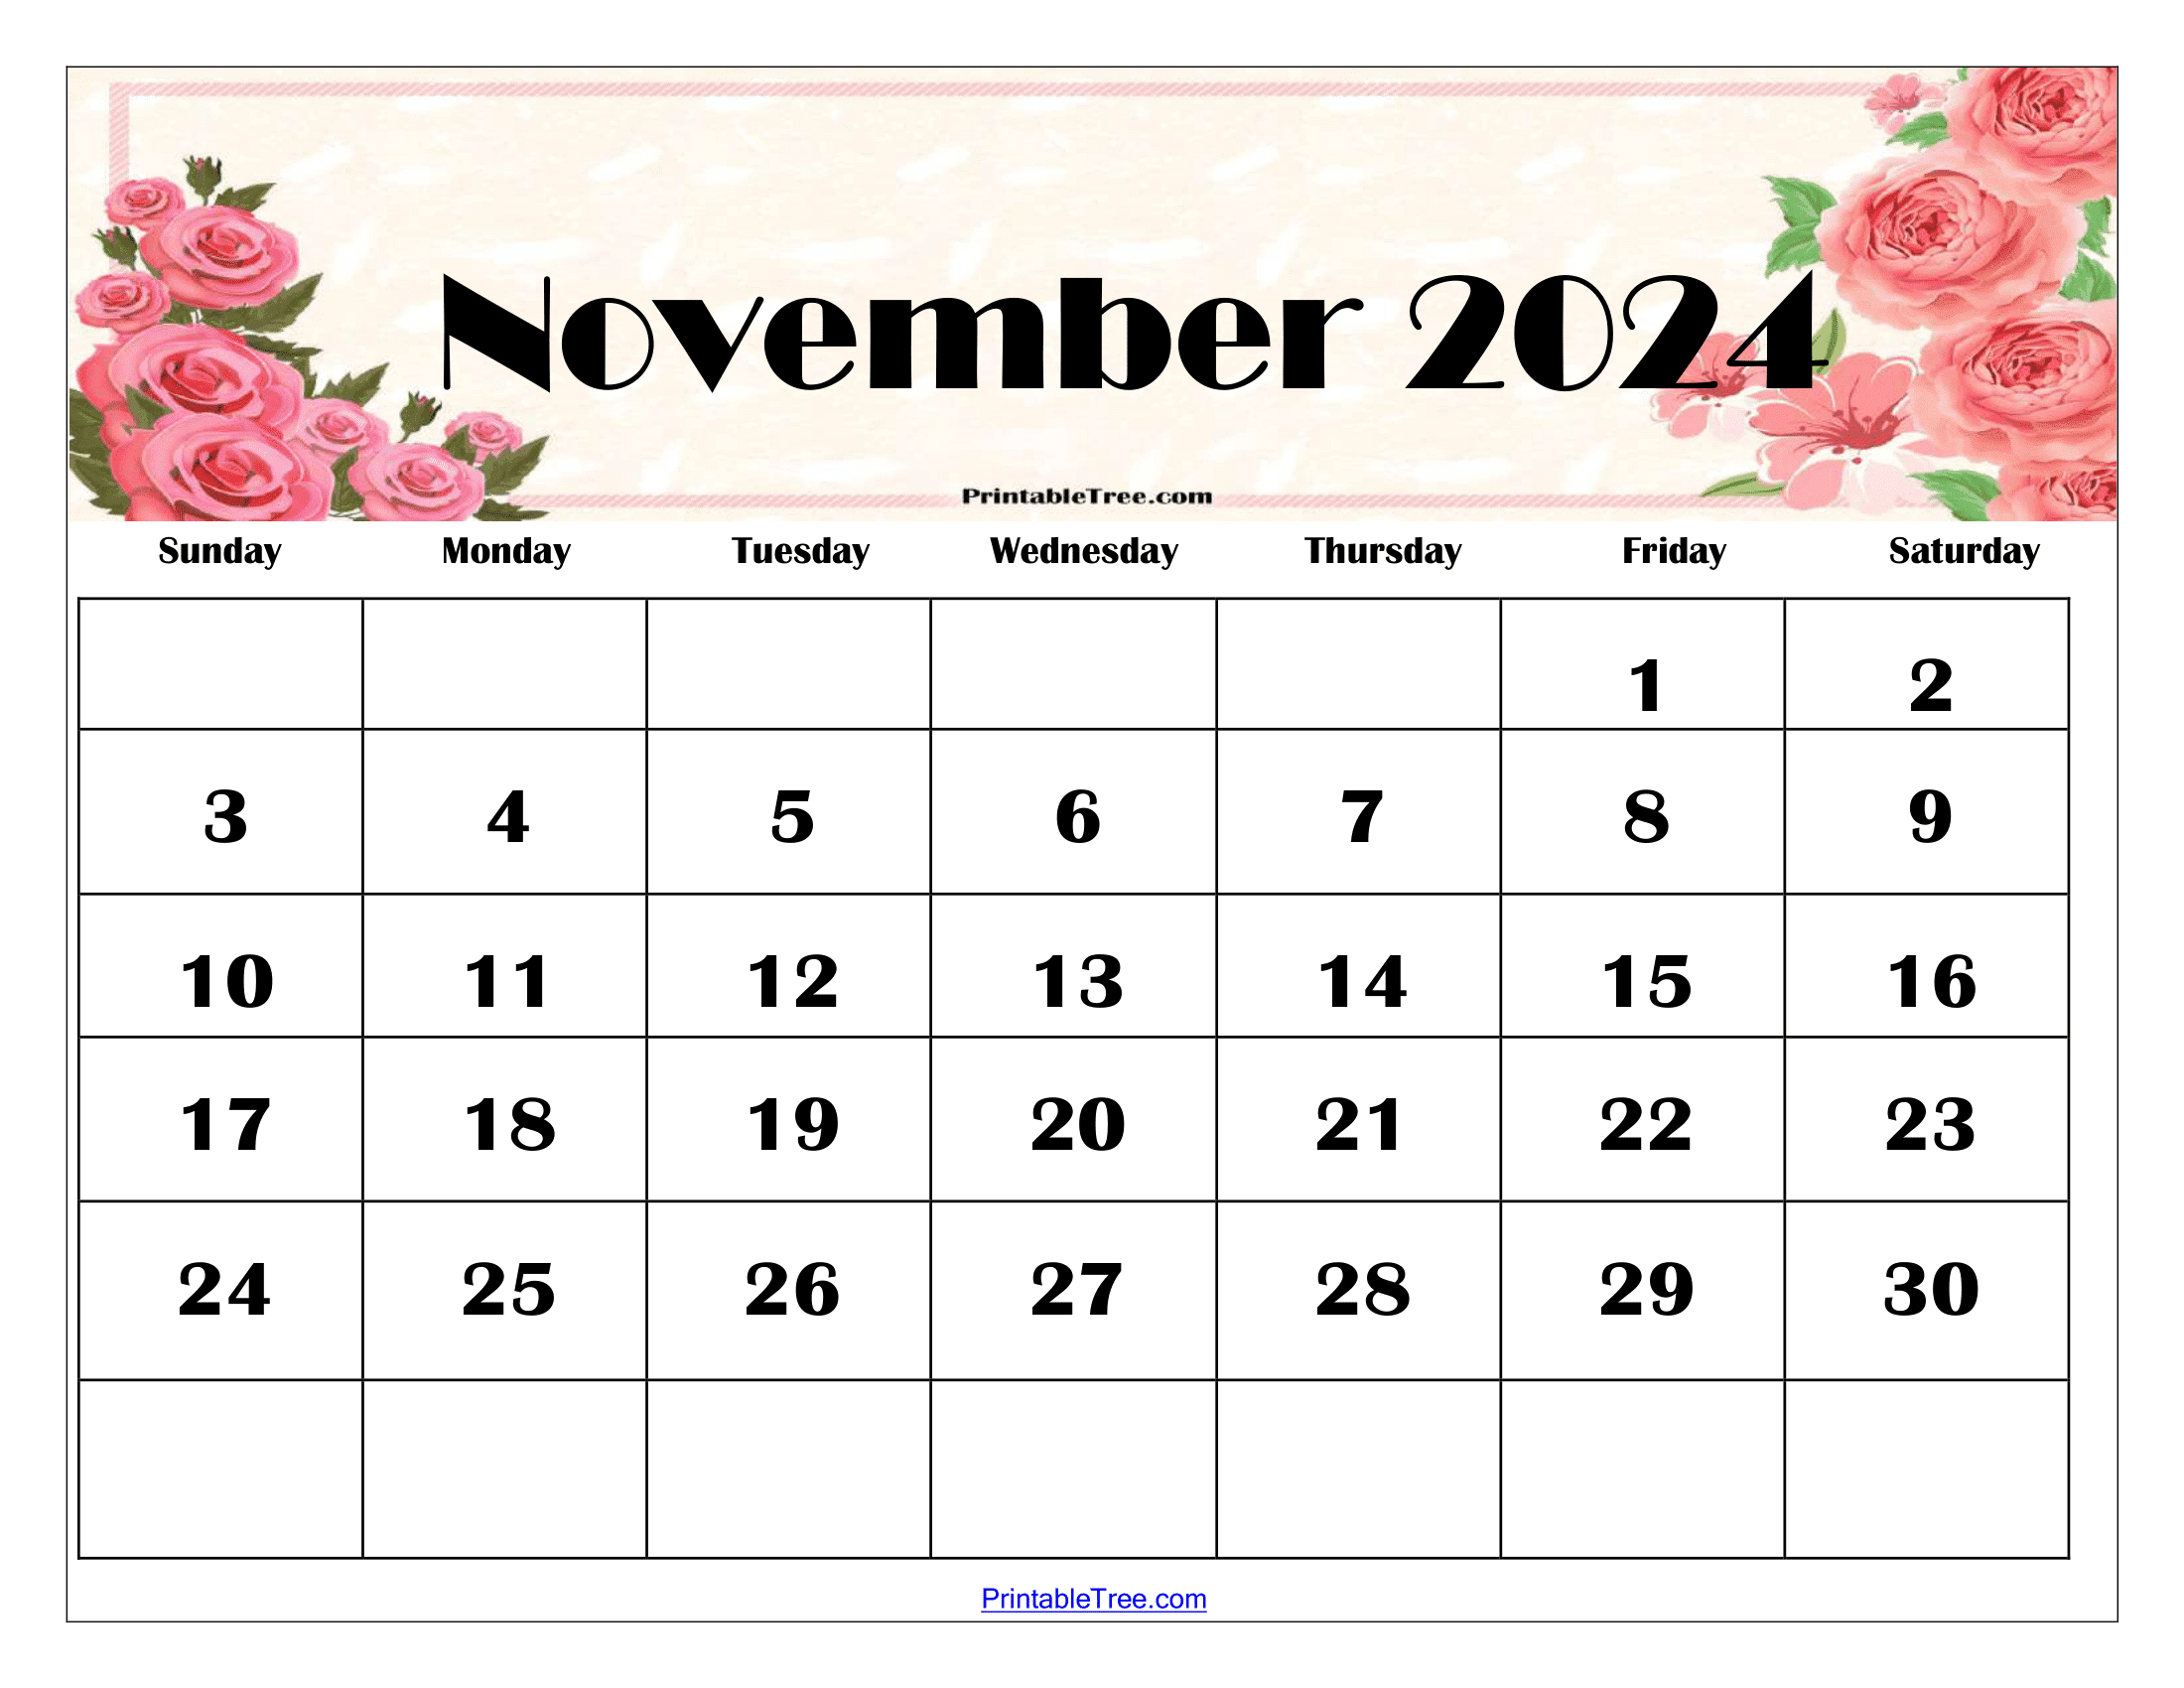 November 2024 Calendar Printable Pdf Template With Holidays regarding Free Printable Appointment Calendar November 2024 Calendar